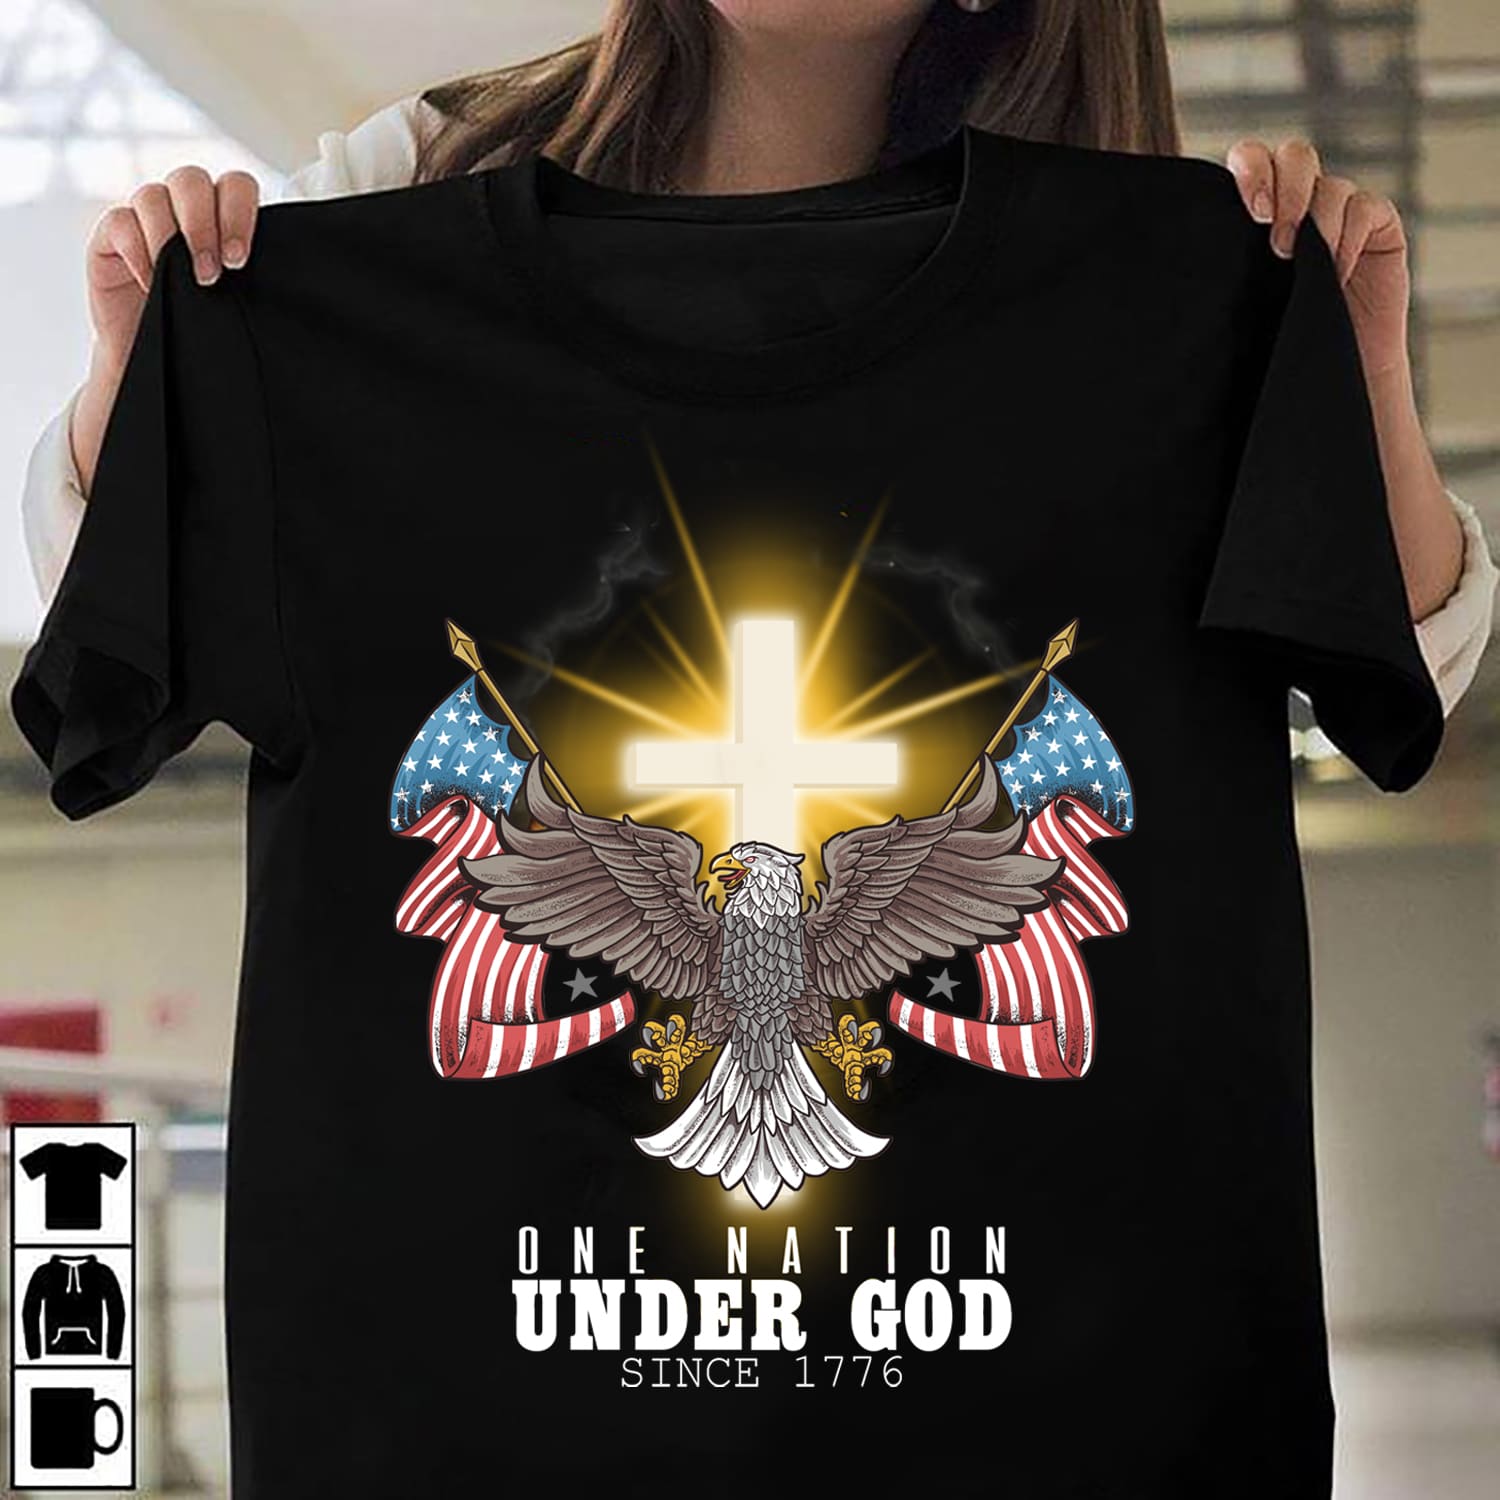 One nation under God - America flag, eagle symbol of America